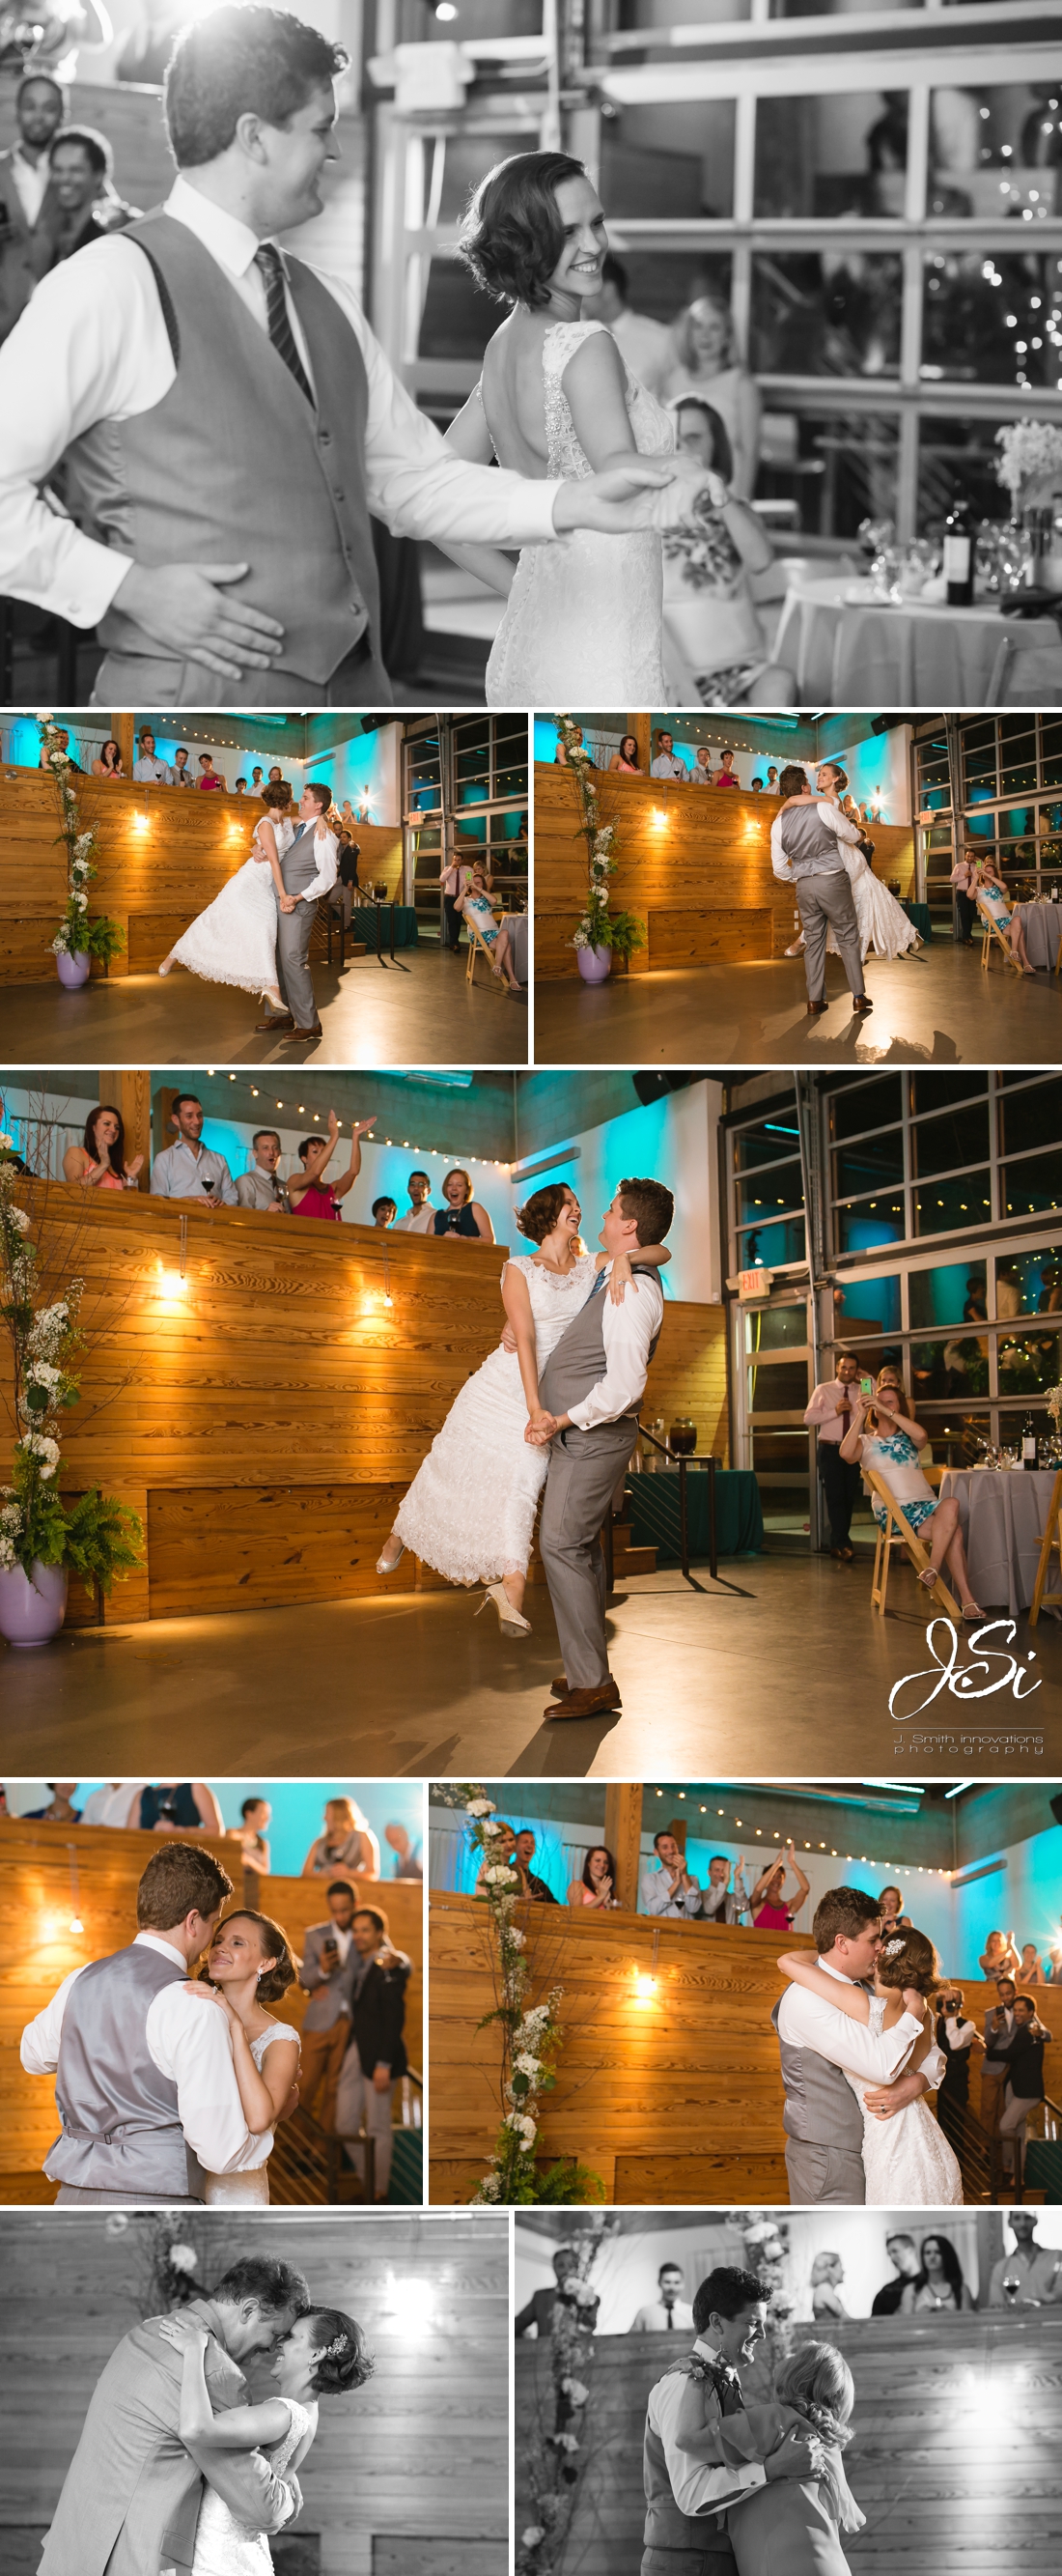 Kansas City Downtown River Market Event Place wedding first dance photo